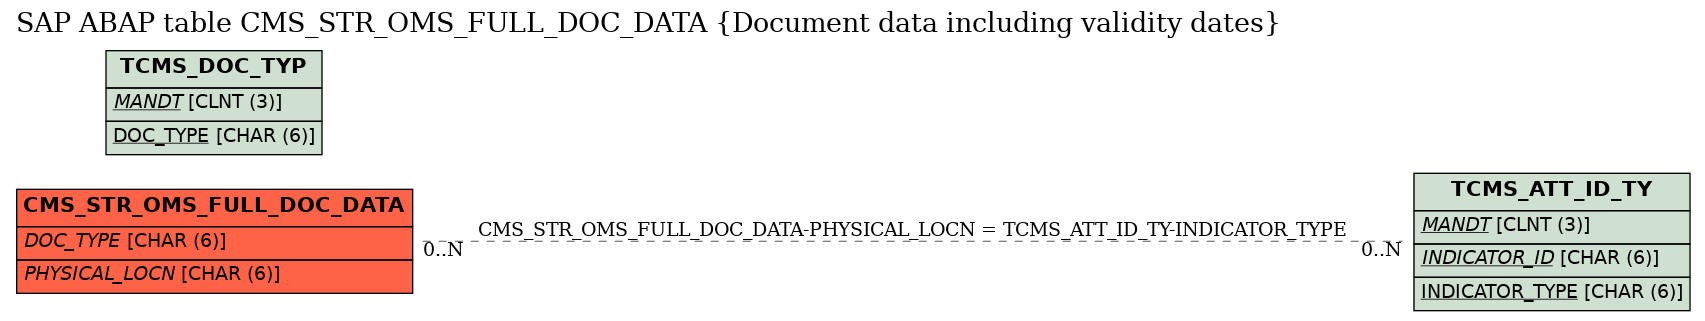 E-R Diagram for table CMS_STR_OMS_FULL_DOC_DATA (Document data including validity dates)